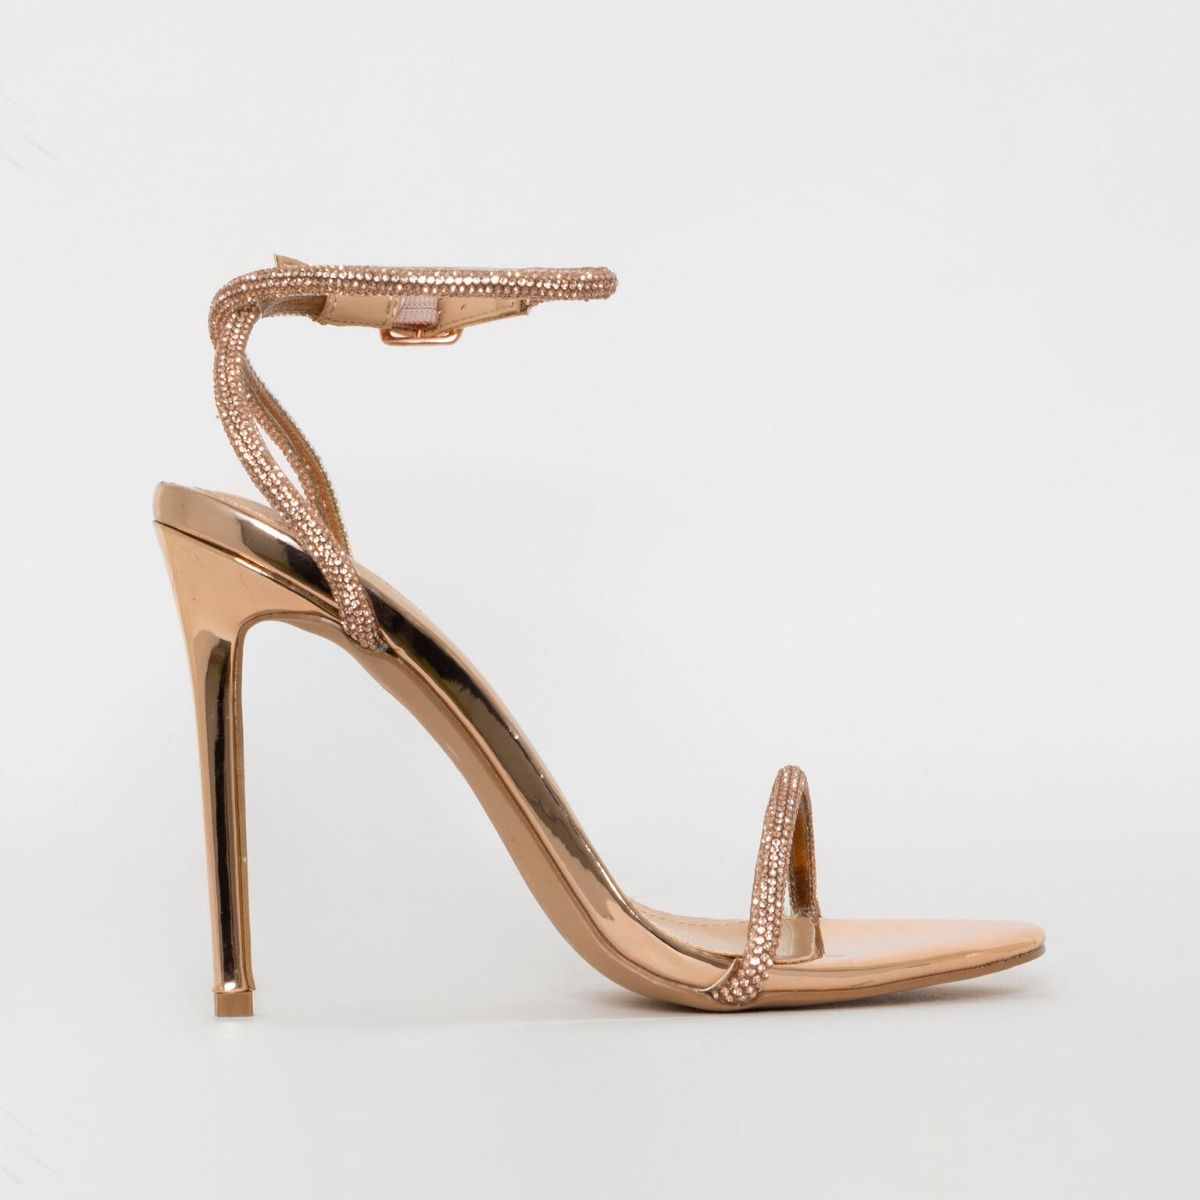 rose gold stiletto heels